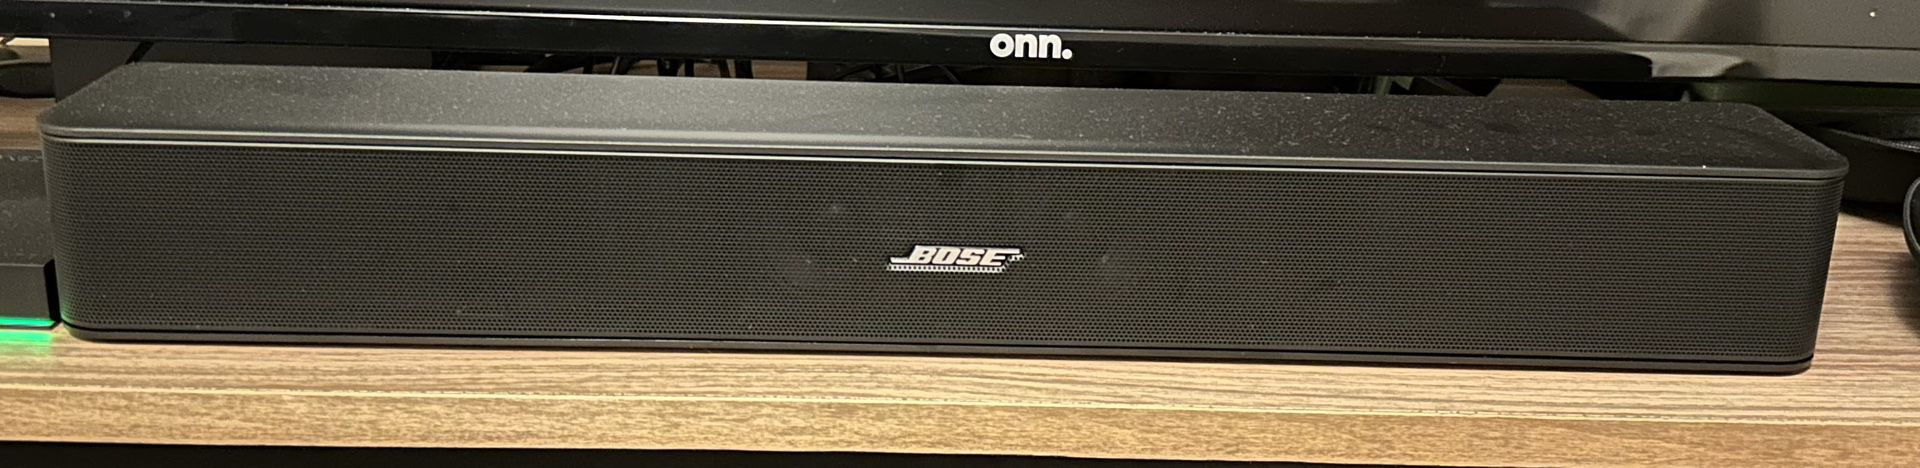 Bose Solo 5 Soundbar 